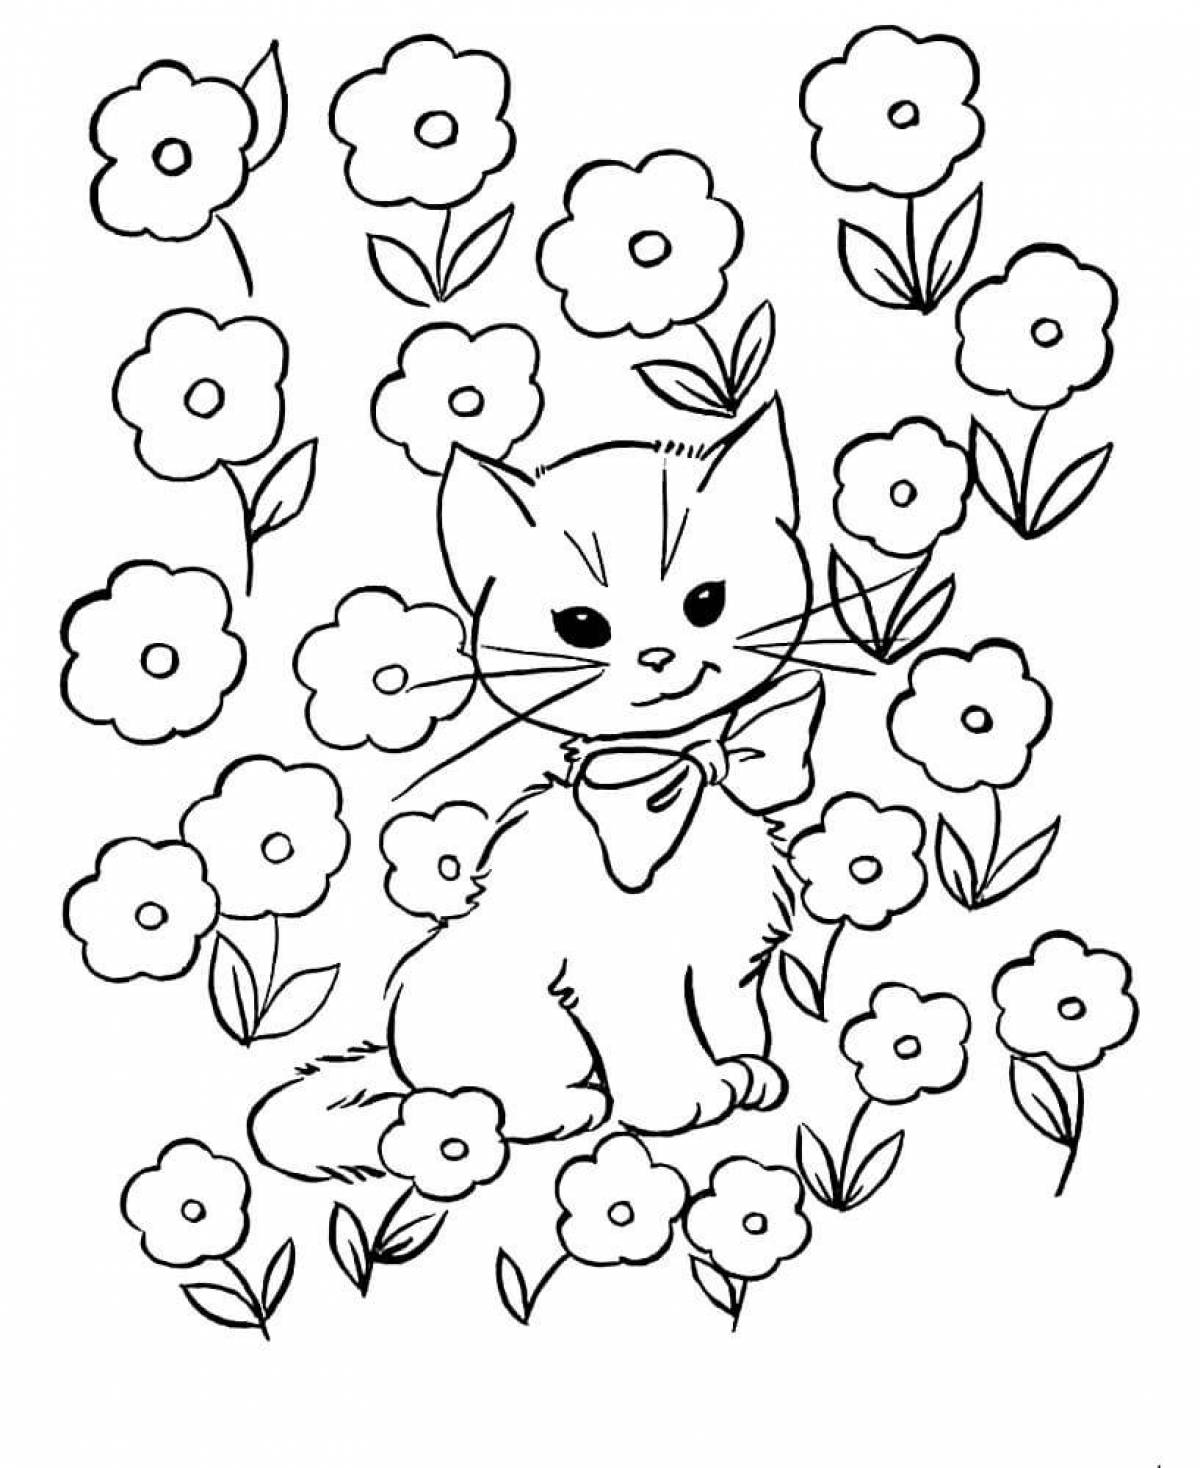 Happy coloring page cat для детей 6-7 лет